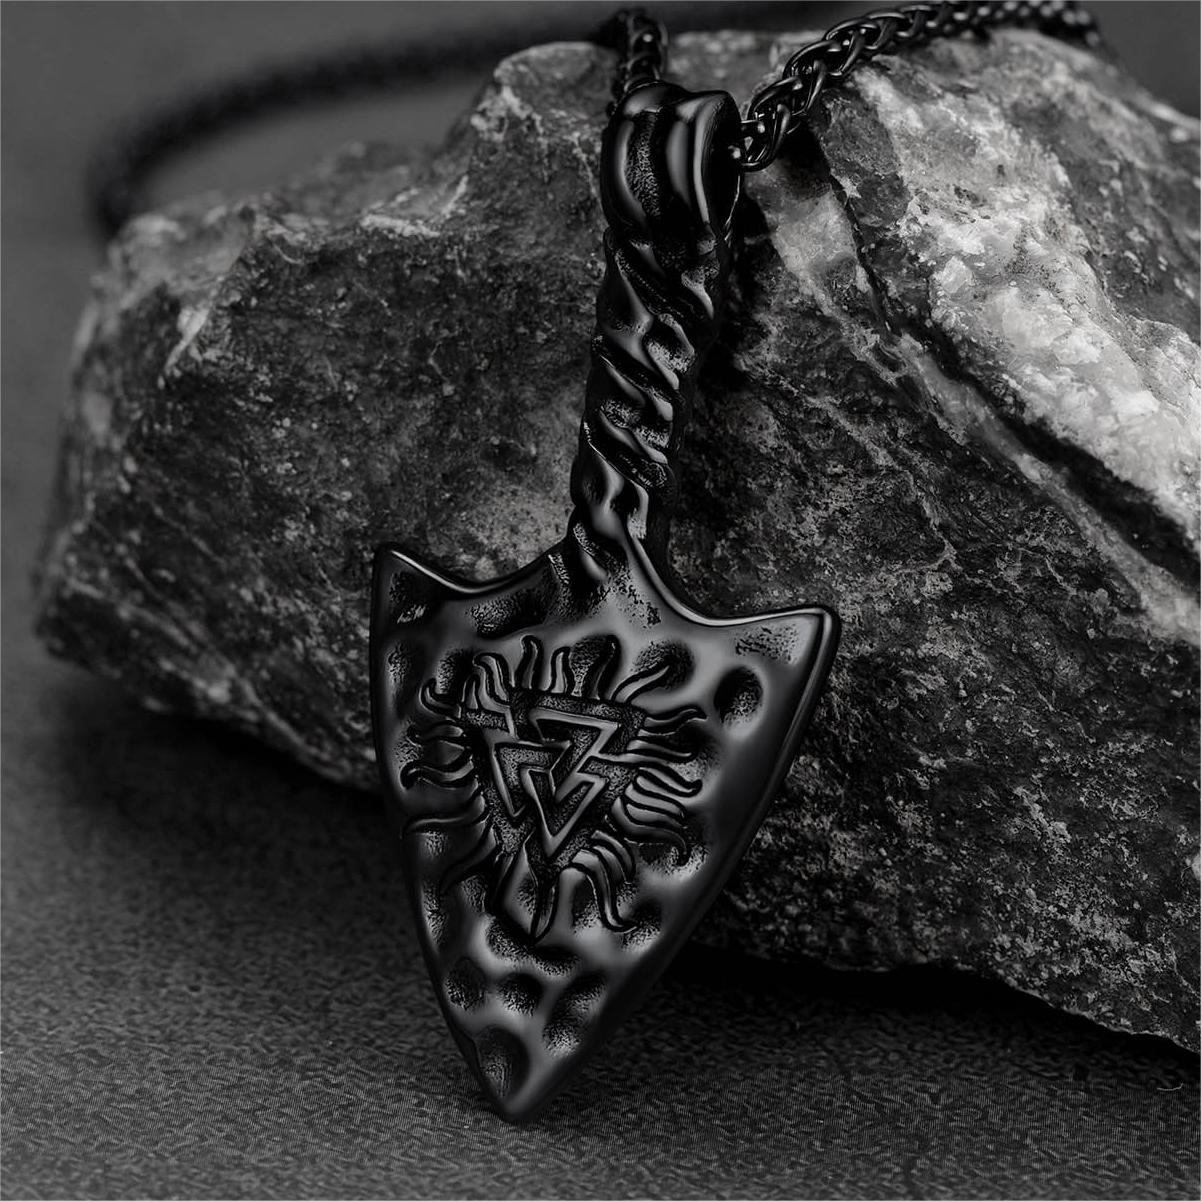 FaithHeart Viking Gungnir Necklace with Valknut for Men FaithHeart